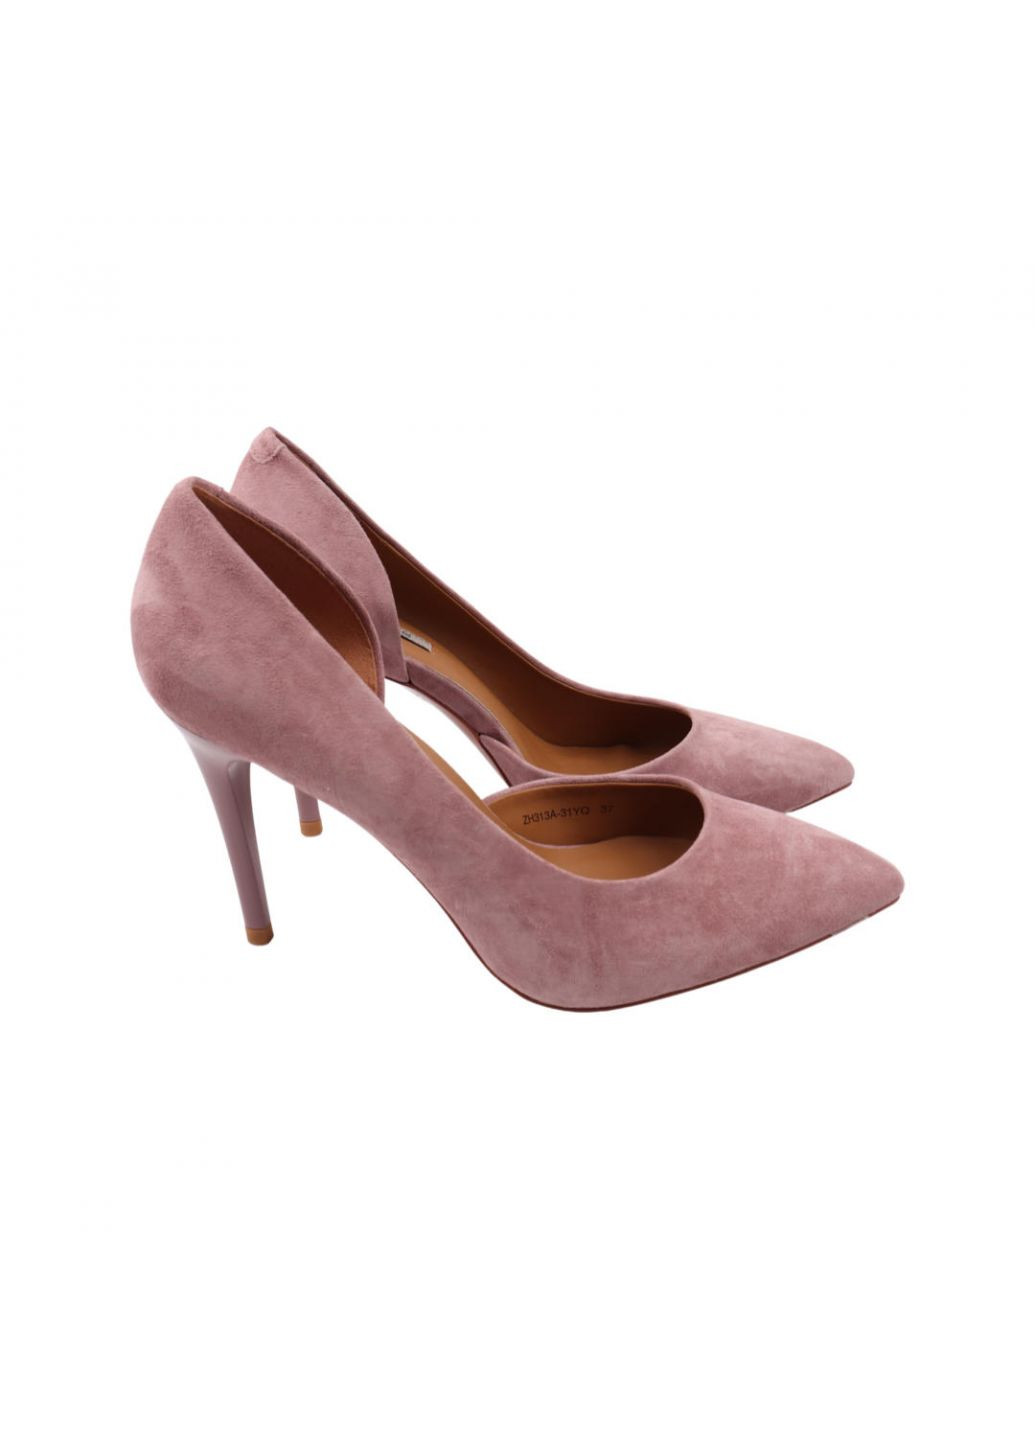 Туфлі жіночі рожеві натуральна замша Anemone 203-22dt (257439771)